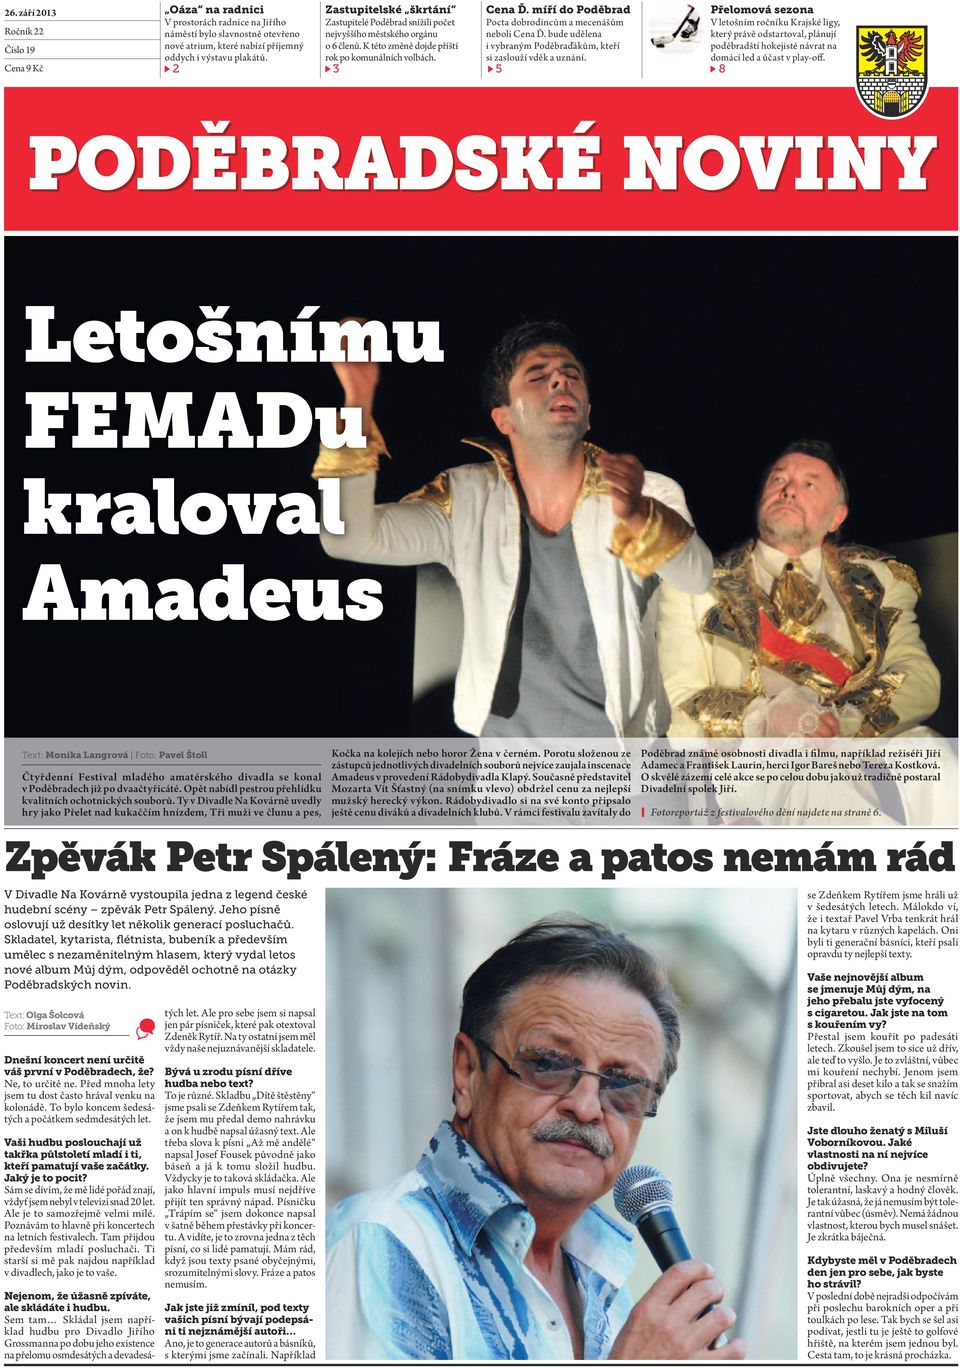 Letošnímu FEMADu kraloval Amadeus - PDF Free Download